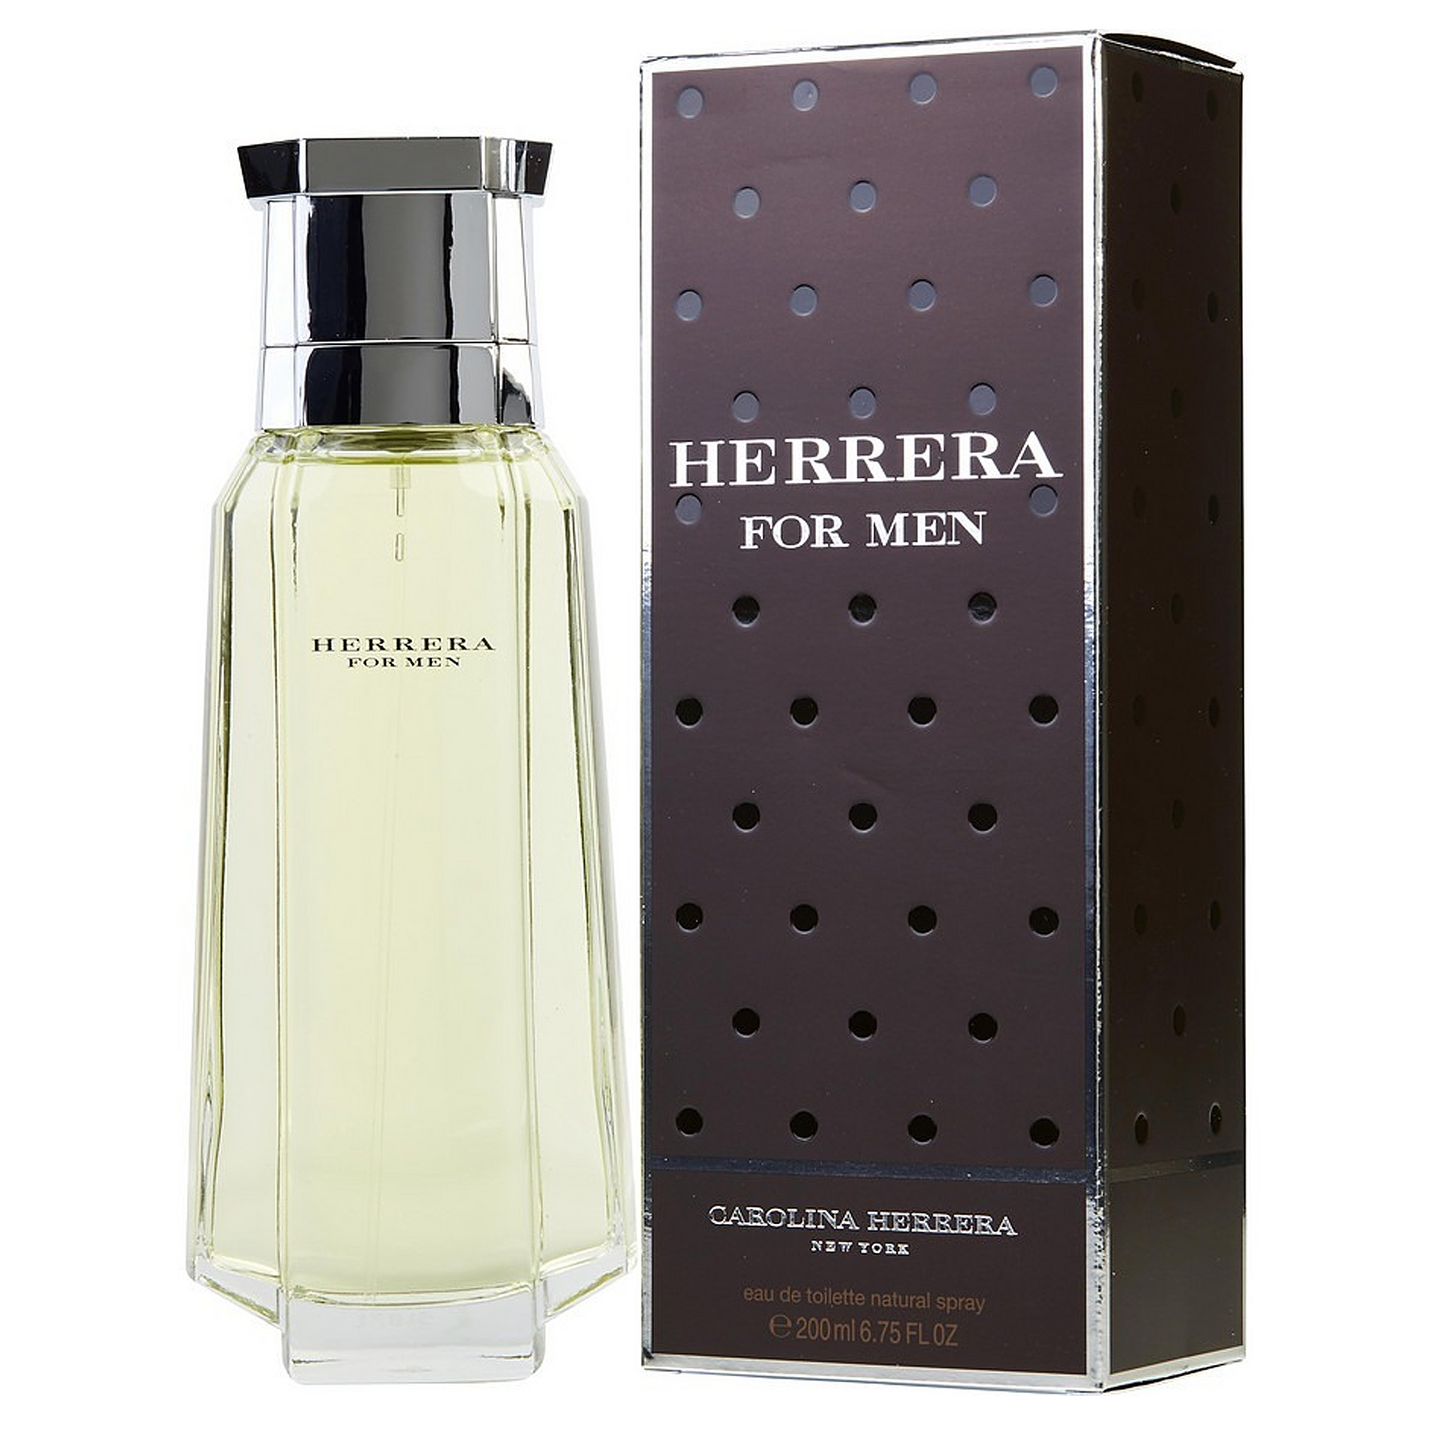 Perfume Herrera For Men 200ml Edt para hombre marca Carolina Herrera®